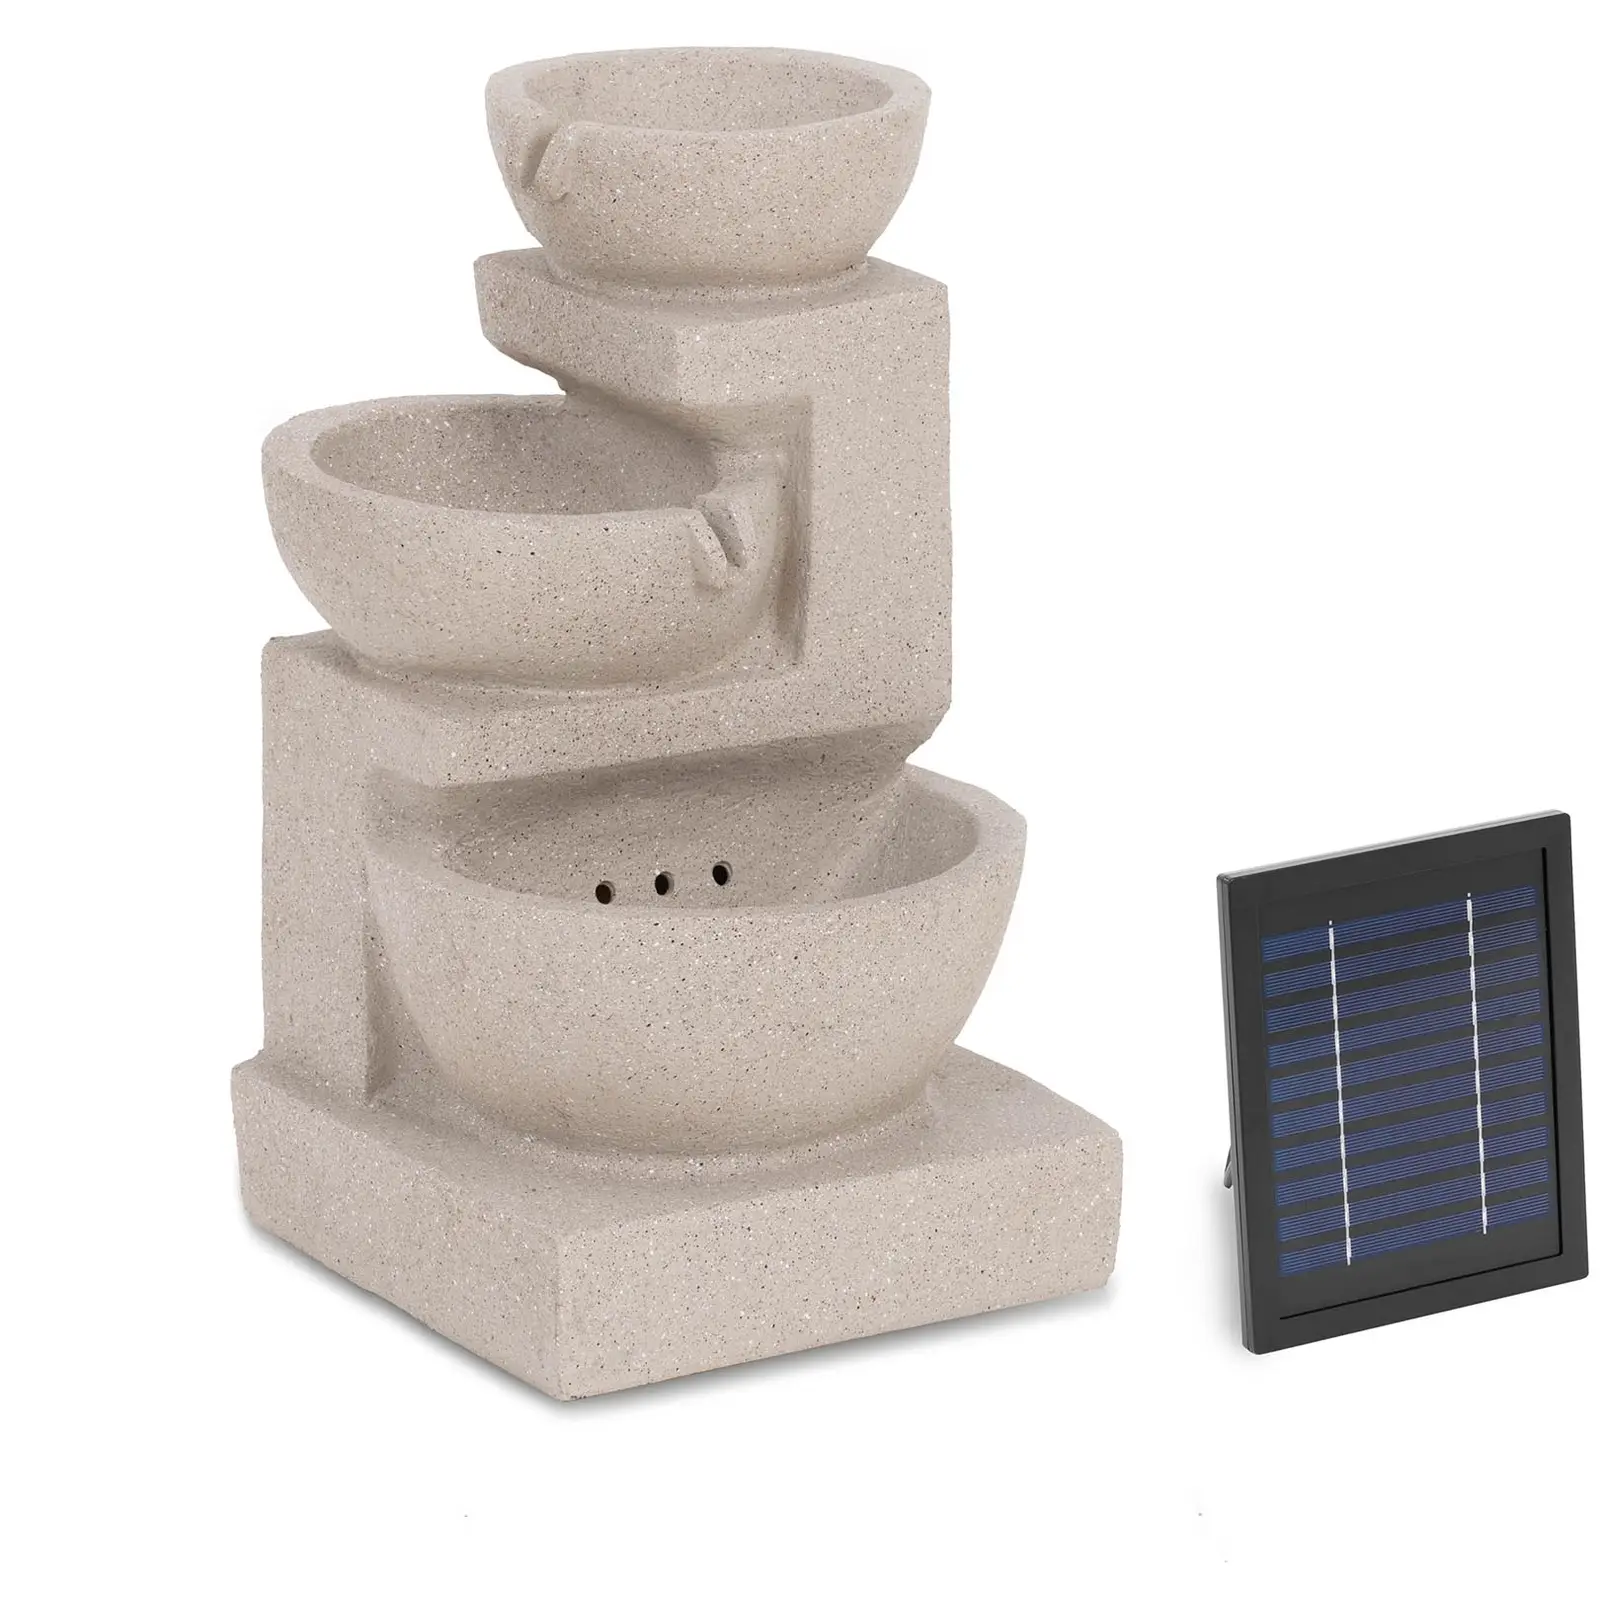 Solar garden fountain - 3 bowls on clay wall - LED lighting